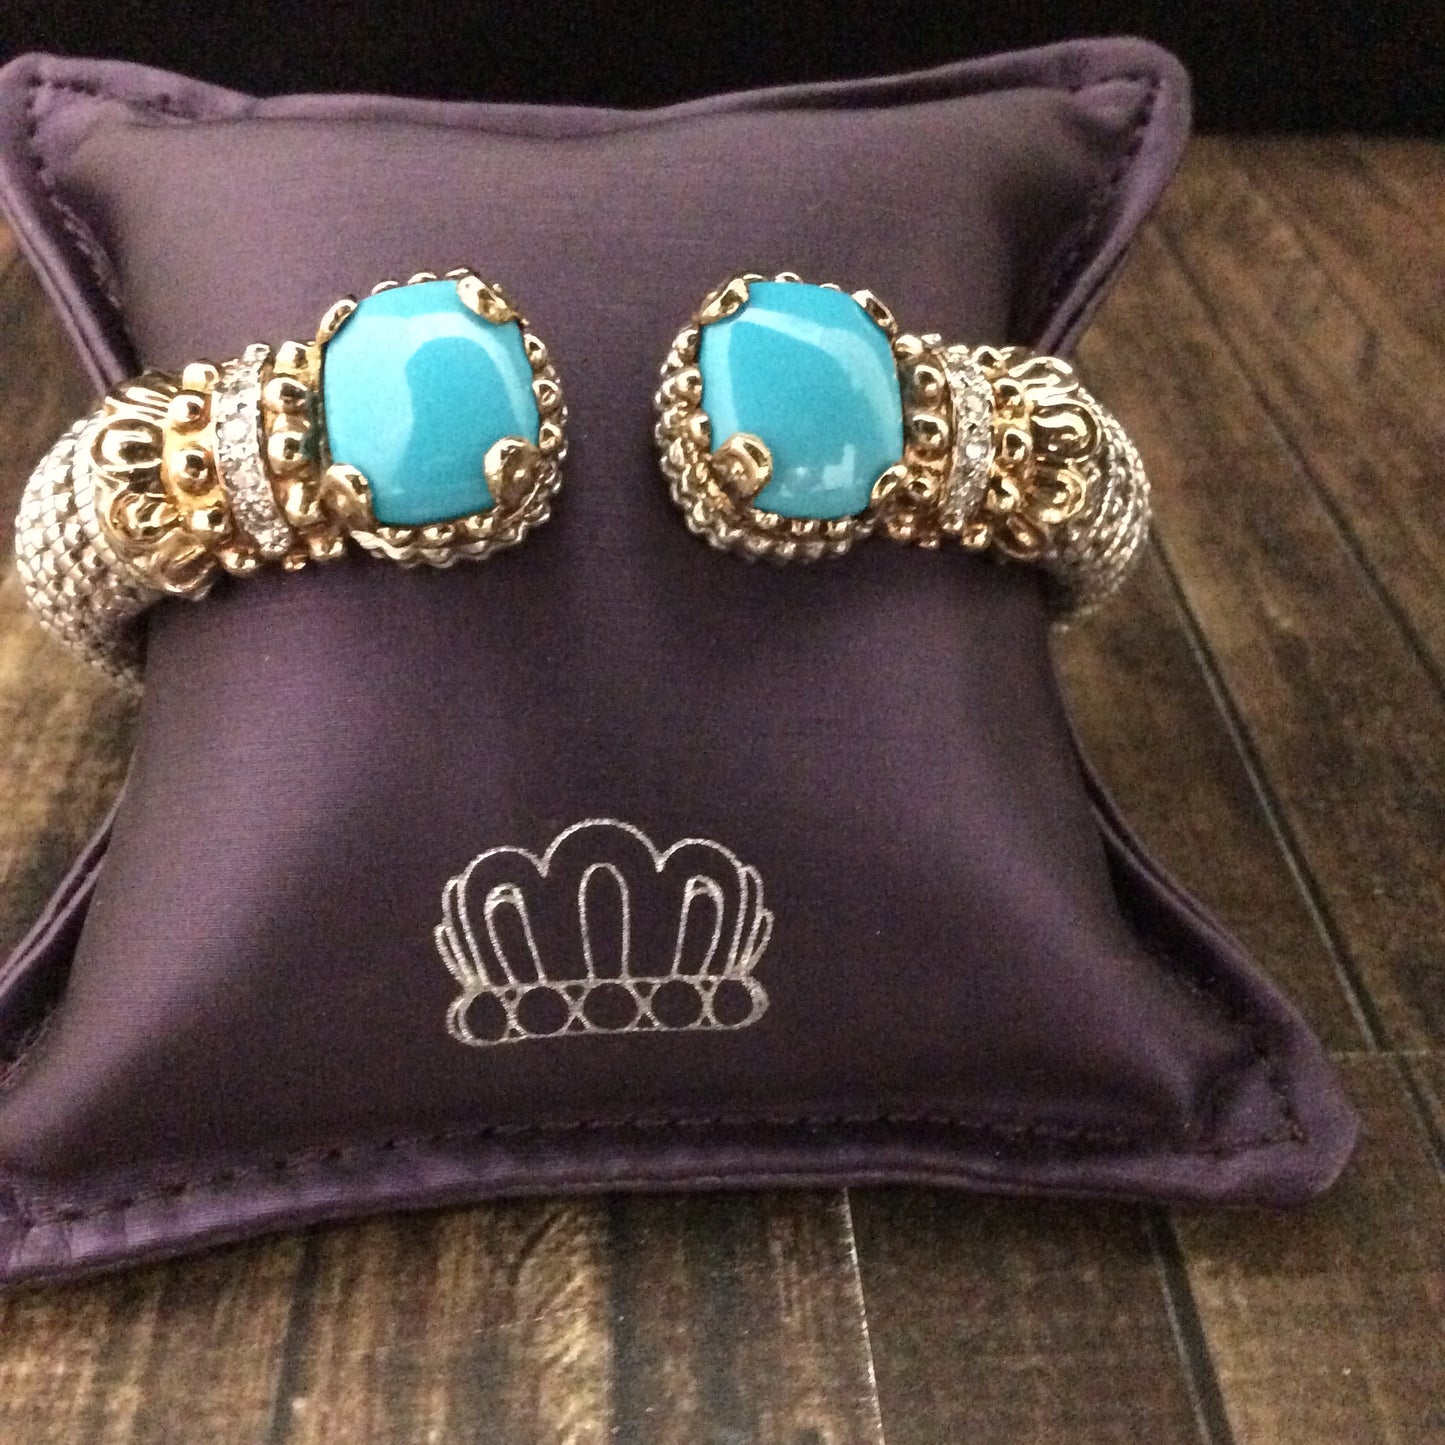 Diamond & Turquoise Two Tone Cuff Bracelet